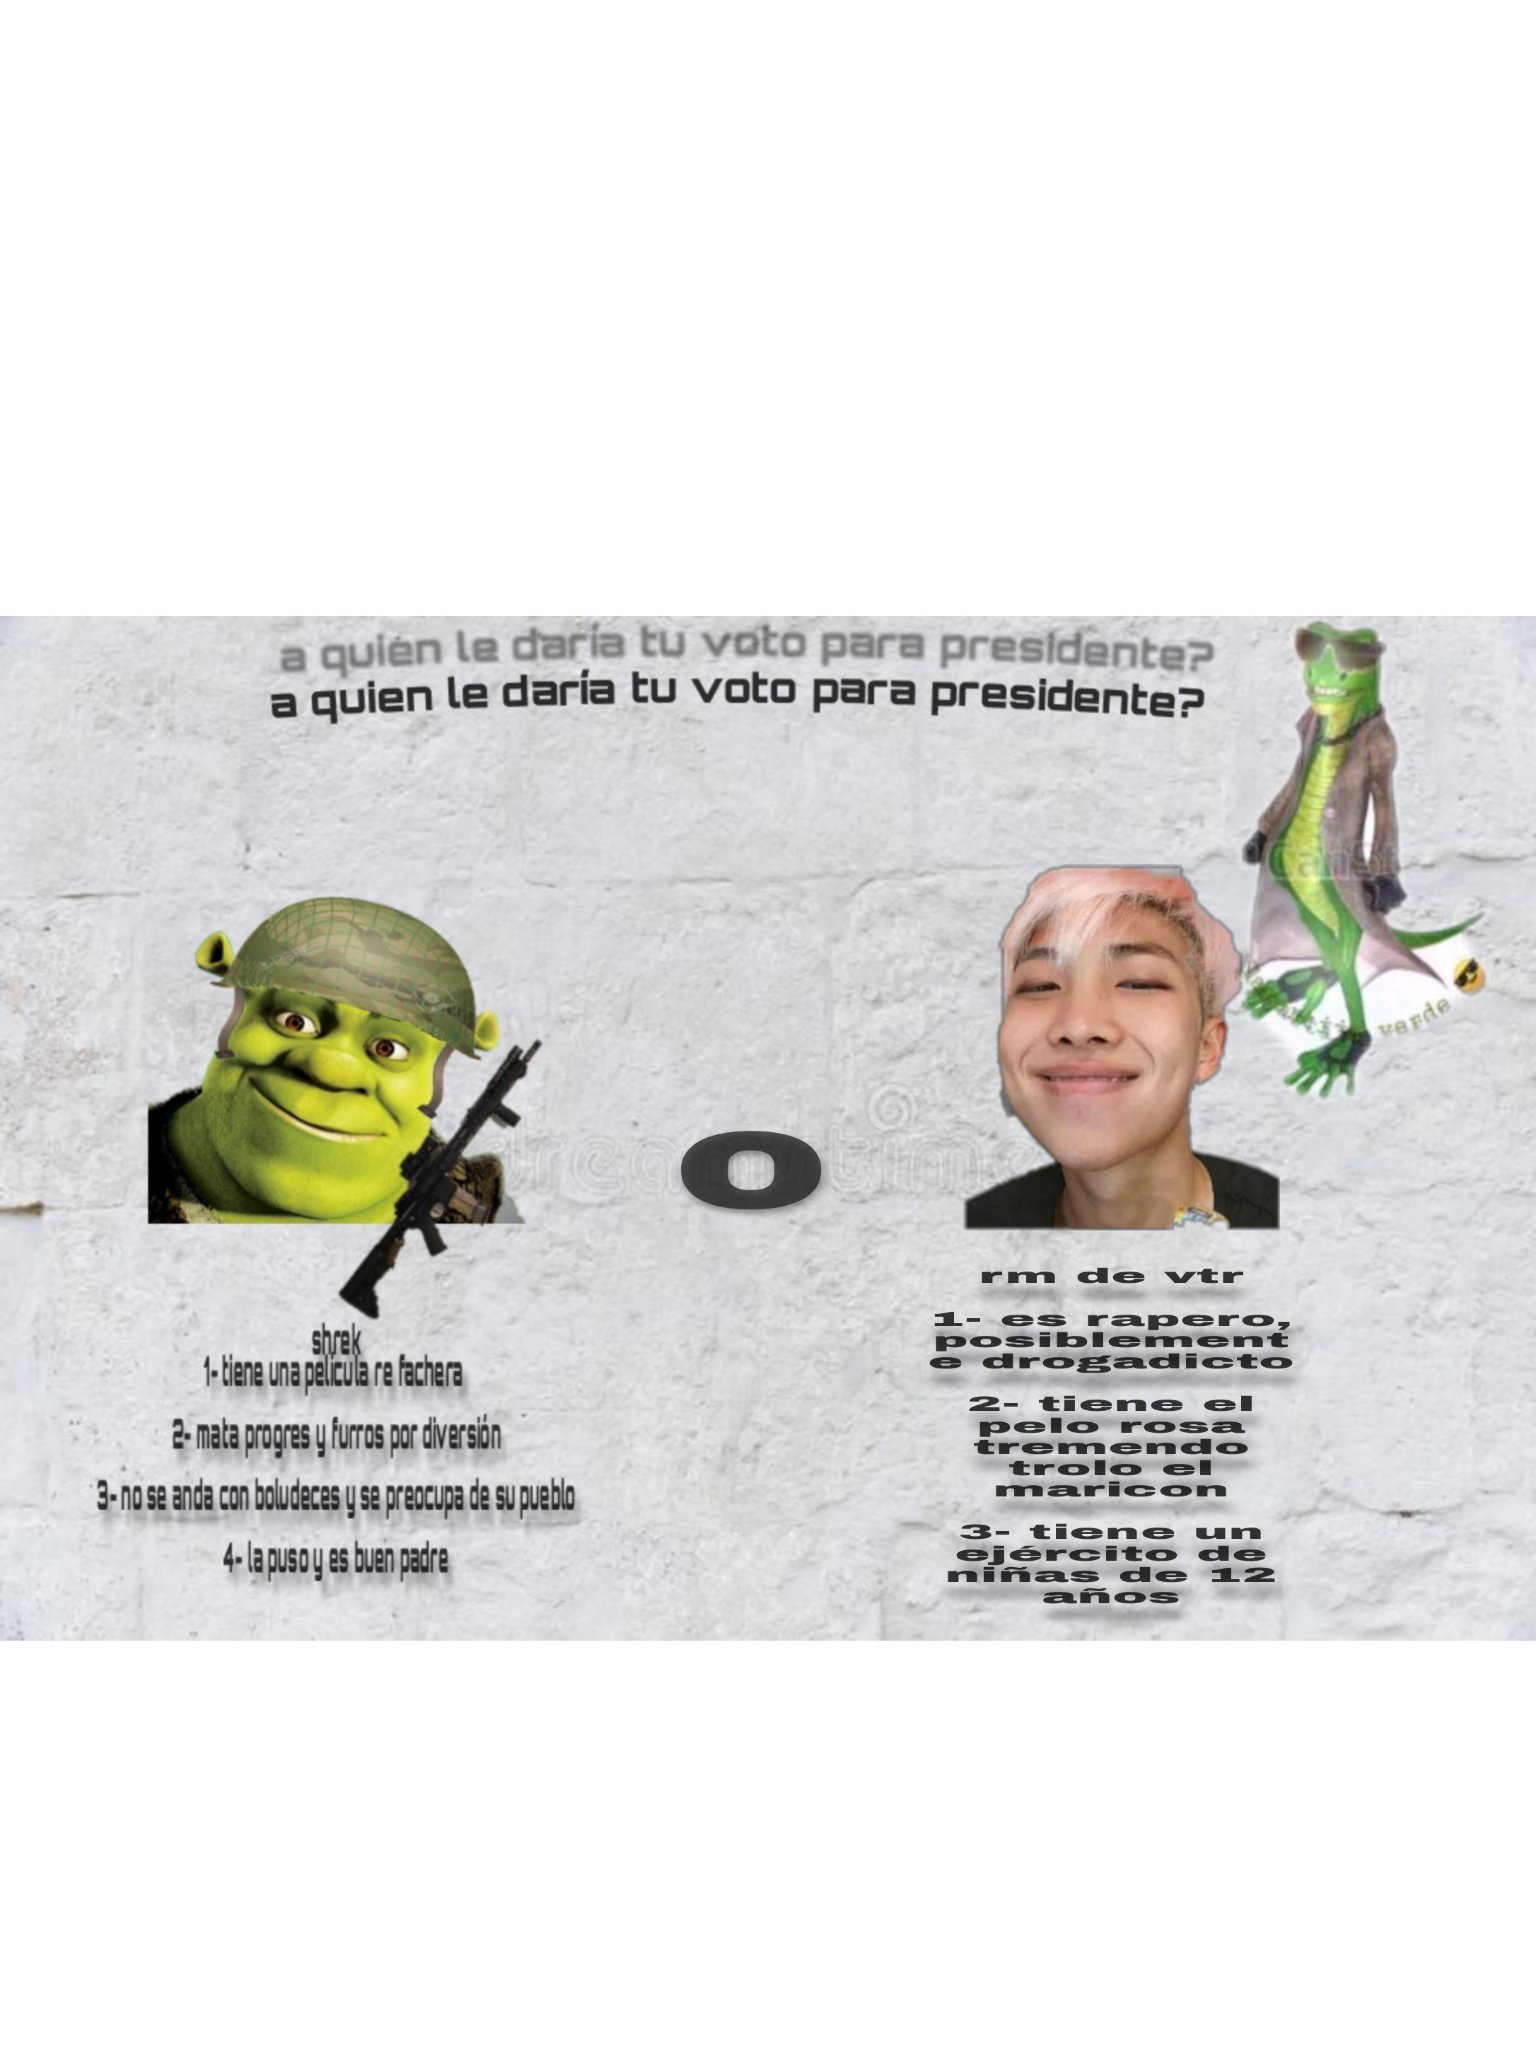 El título voto por shrek  (perdón, edite mal las letras de Shrek) - meme